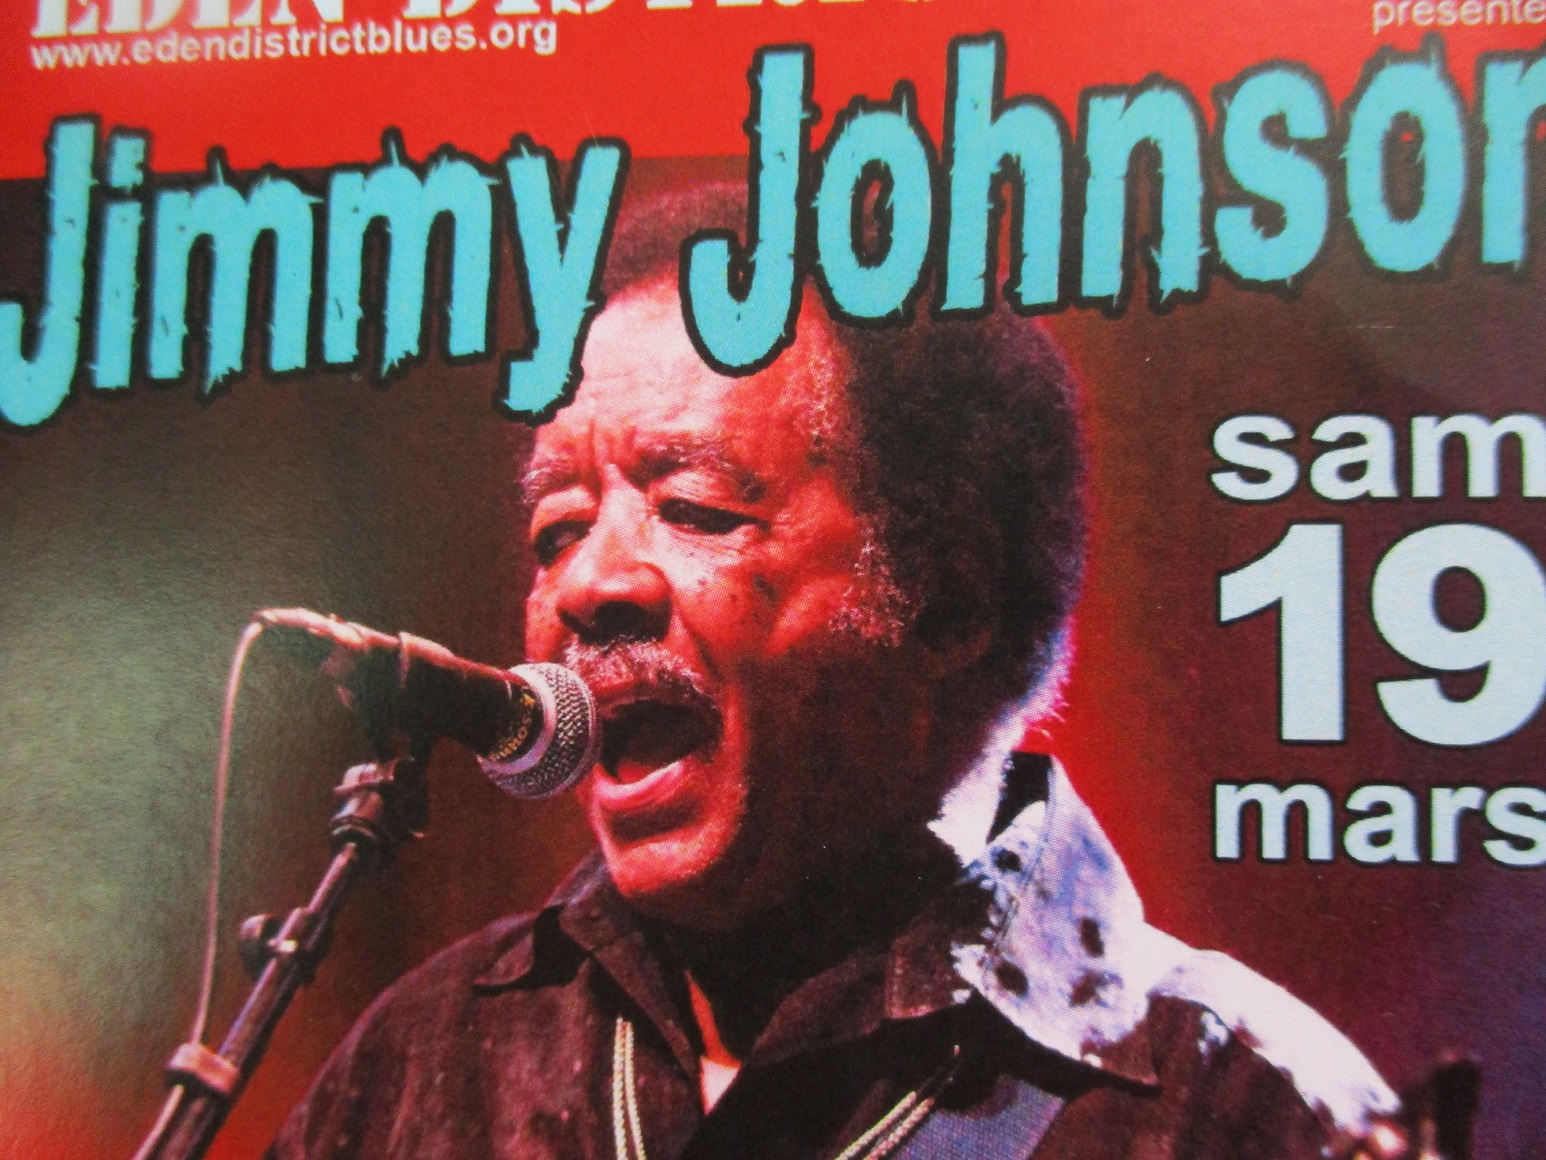 Jimmy Johnson en concert !